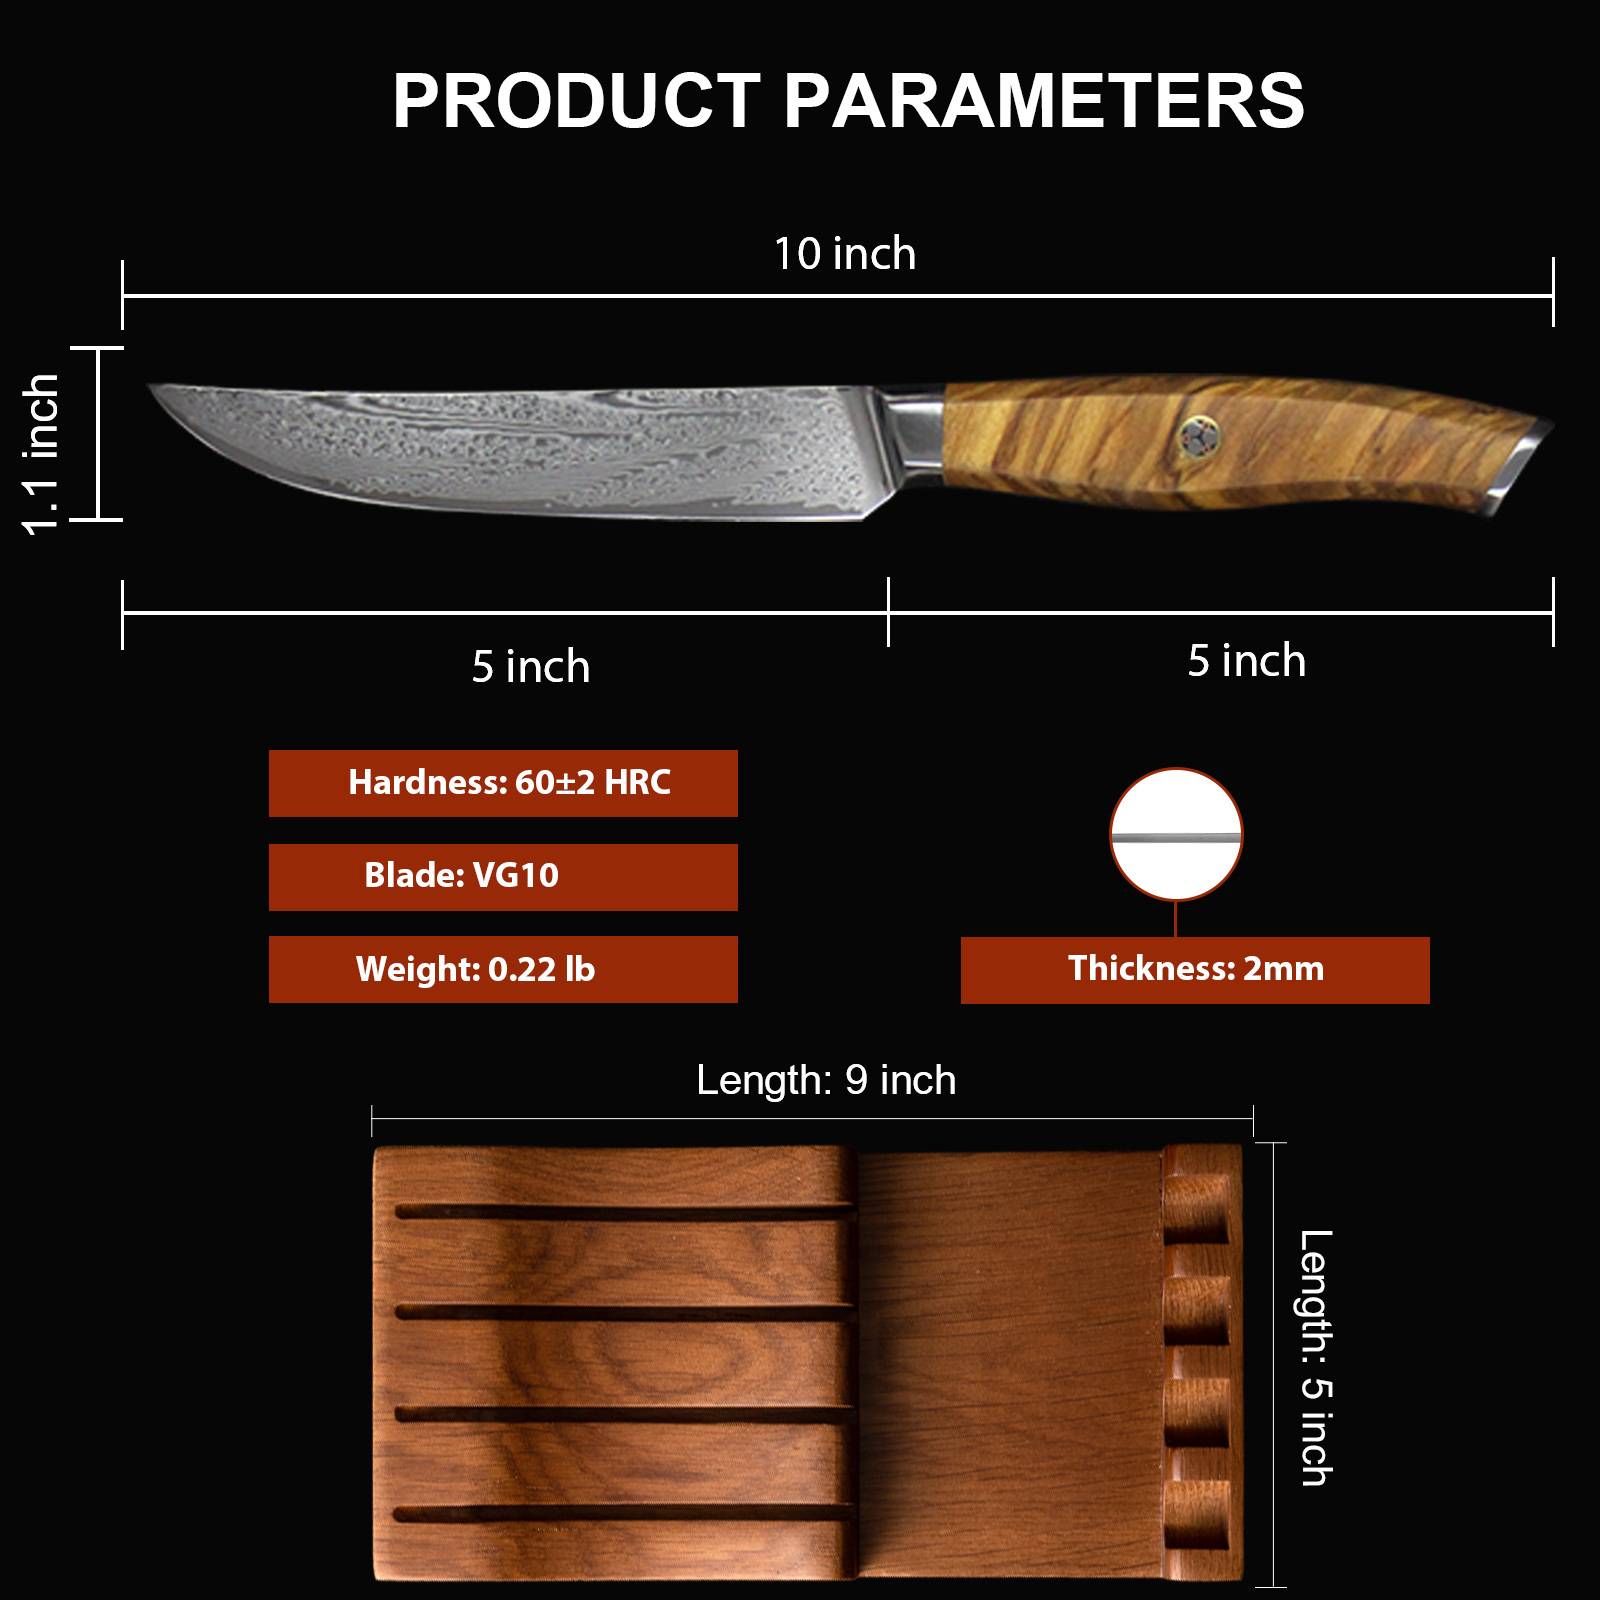 https://img-va.myshopline.com/image/store/2000714577/1648111340947/4-Piece-Japanese-Steak-Knife-Set-With-Wood-Drawer-Organizer-Insert-(5).jpeg?w=1600&h=1600